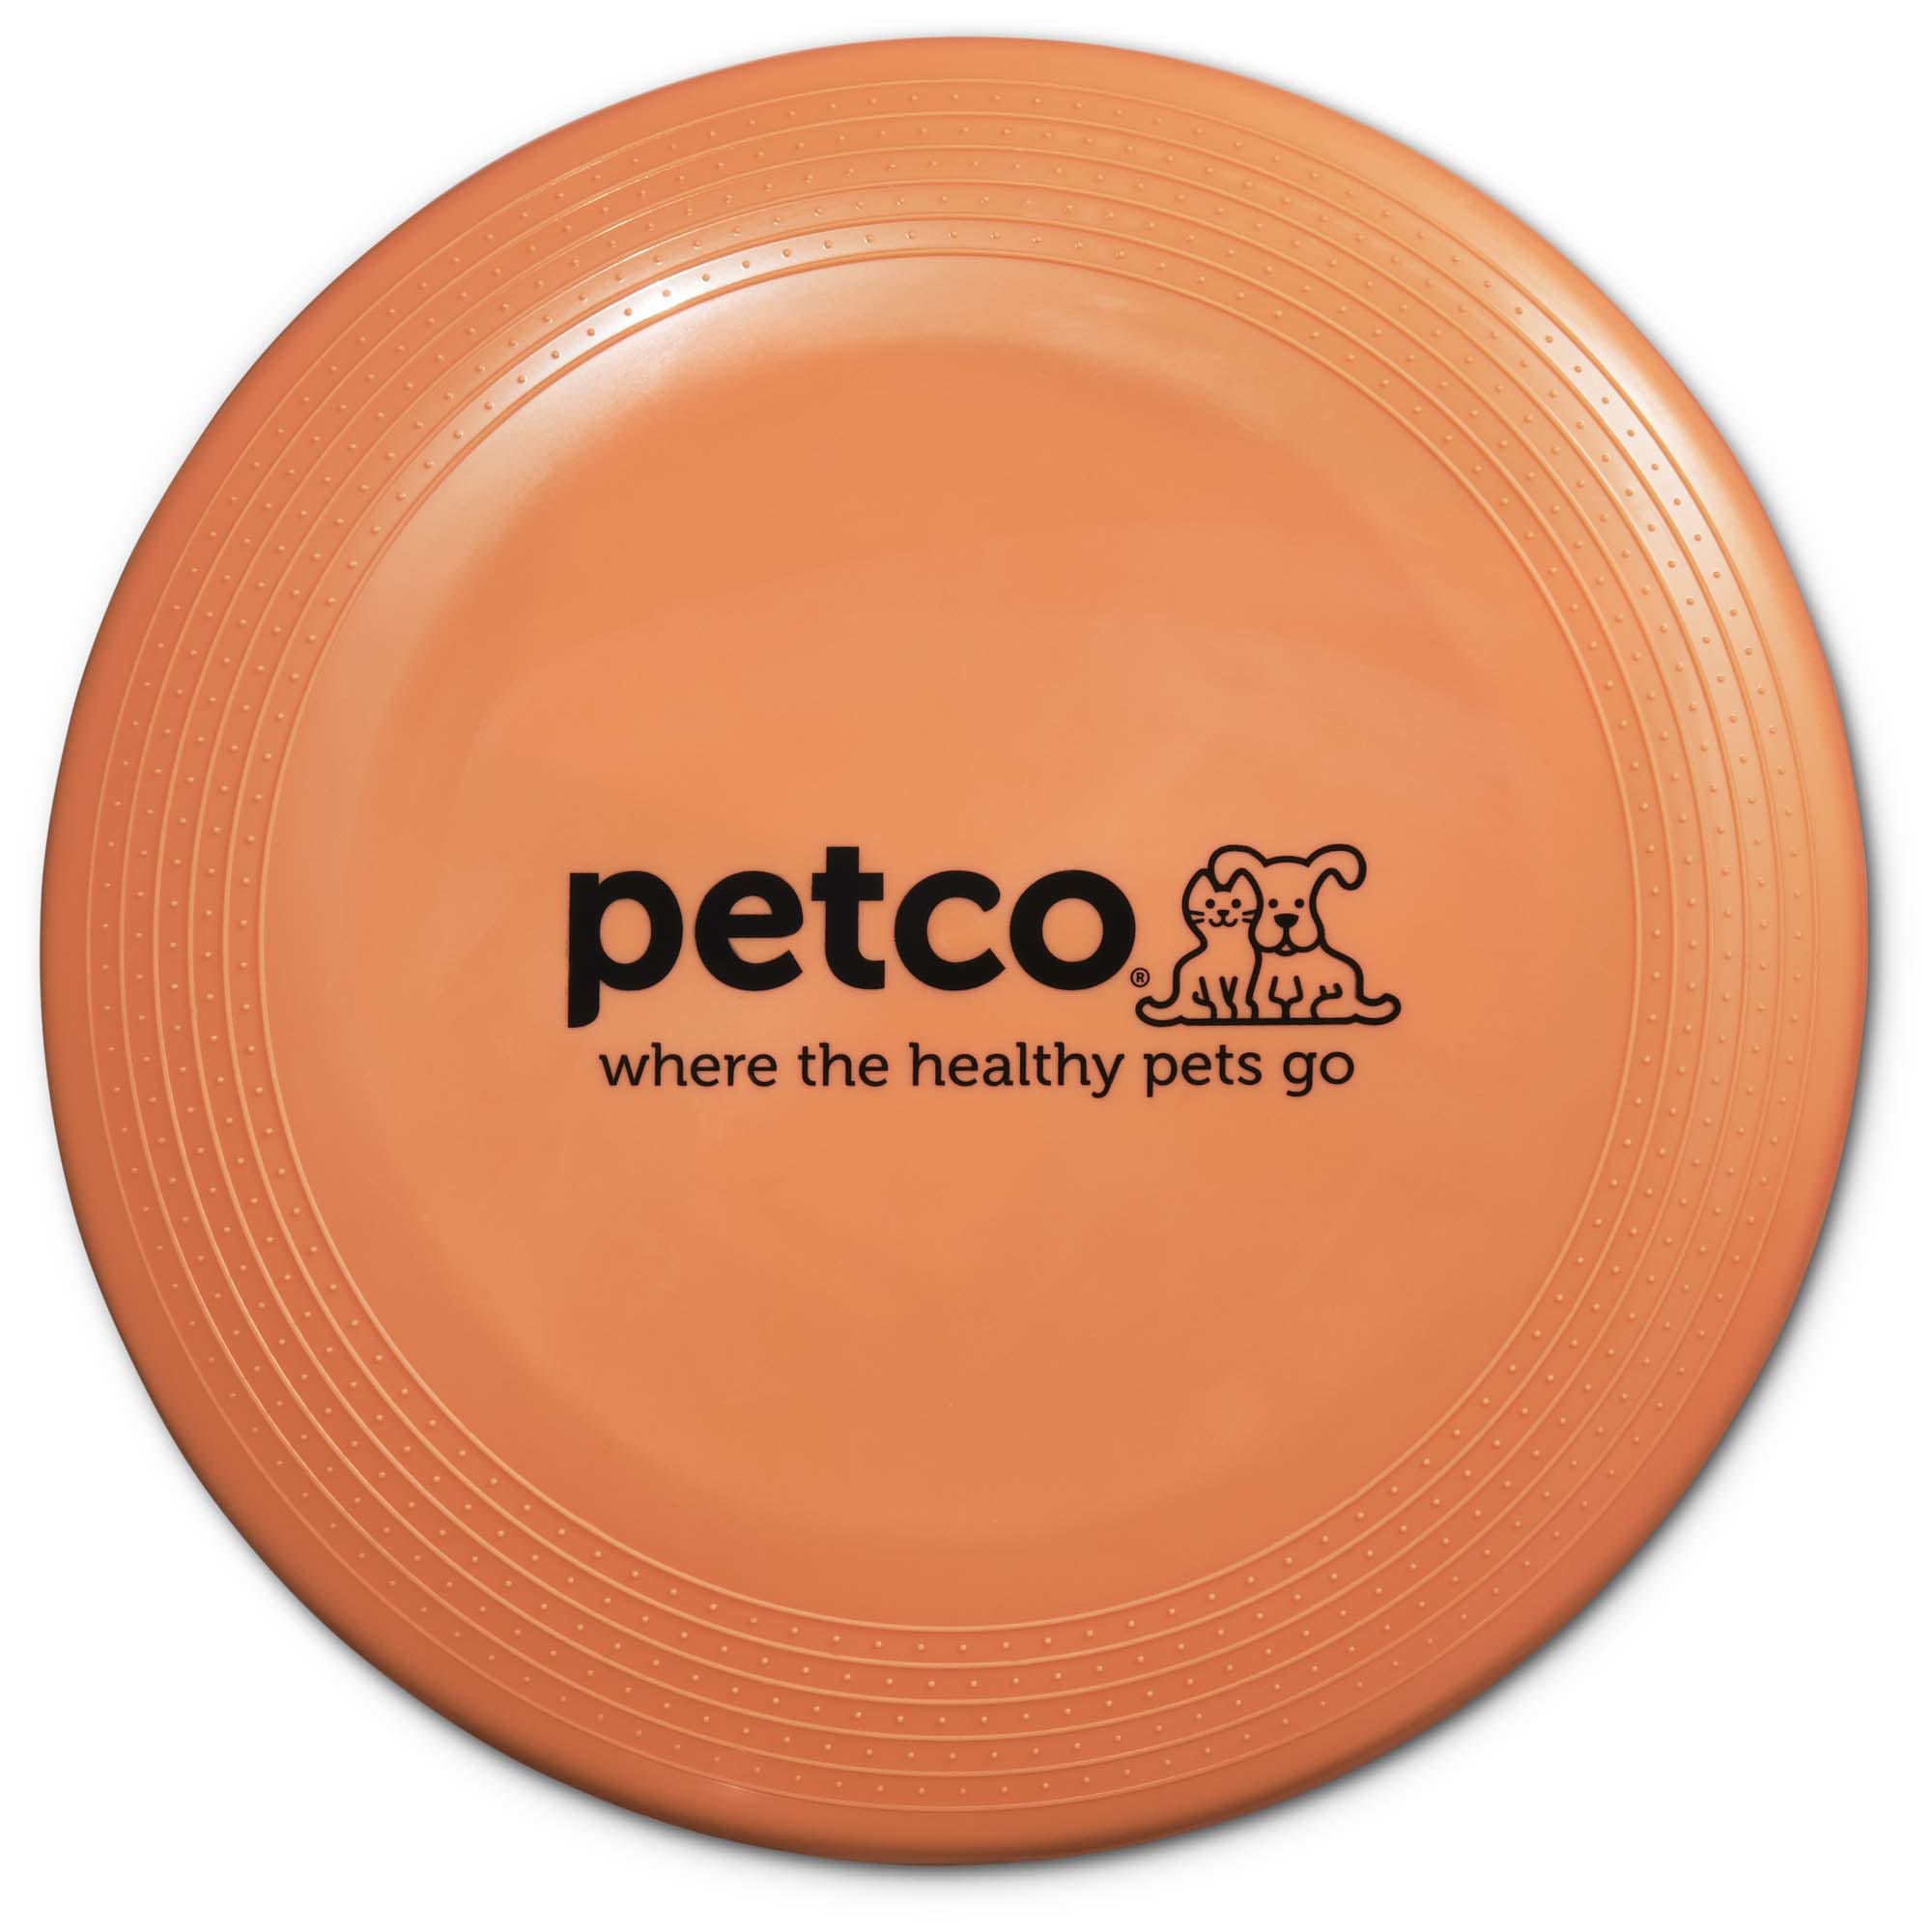 Petco Flyer in Assorted Colors, Medium 